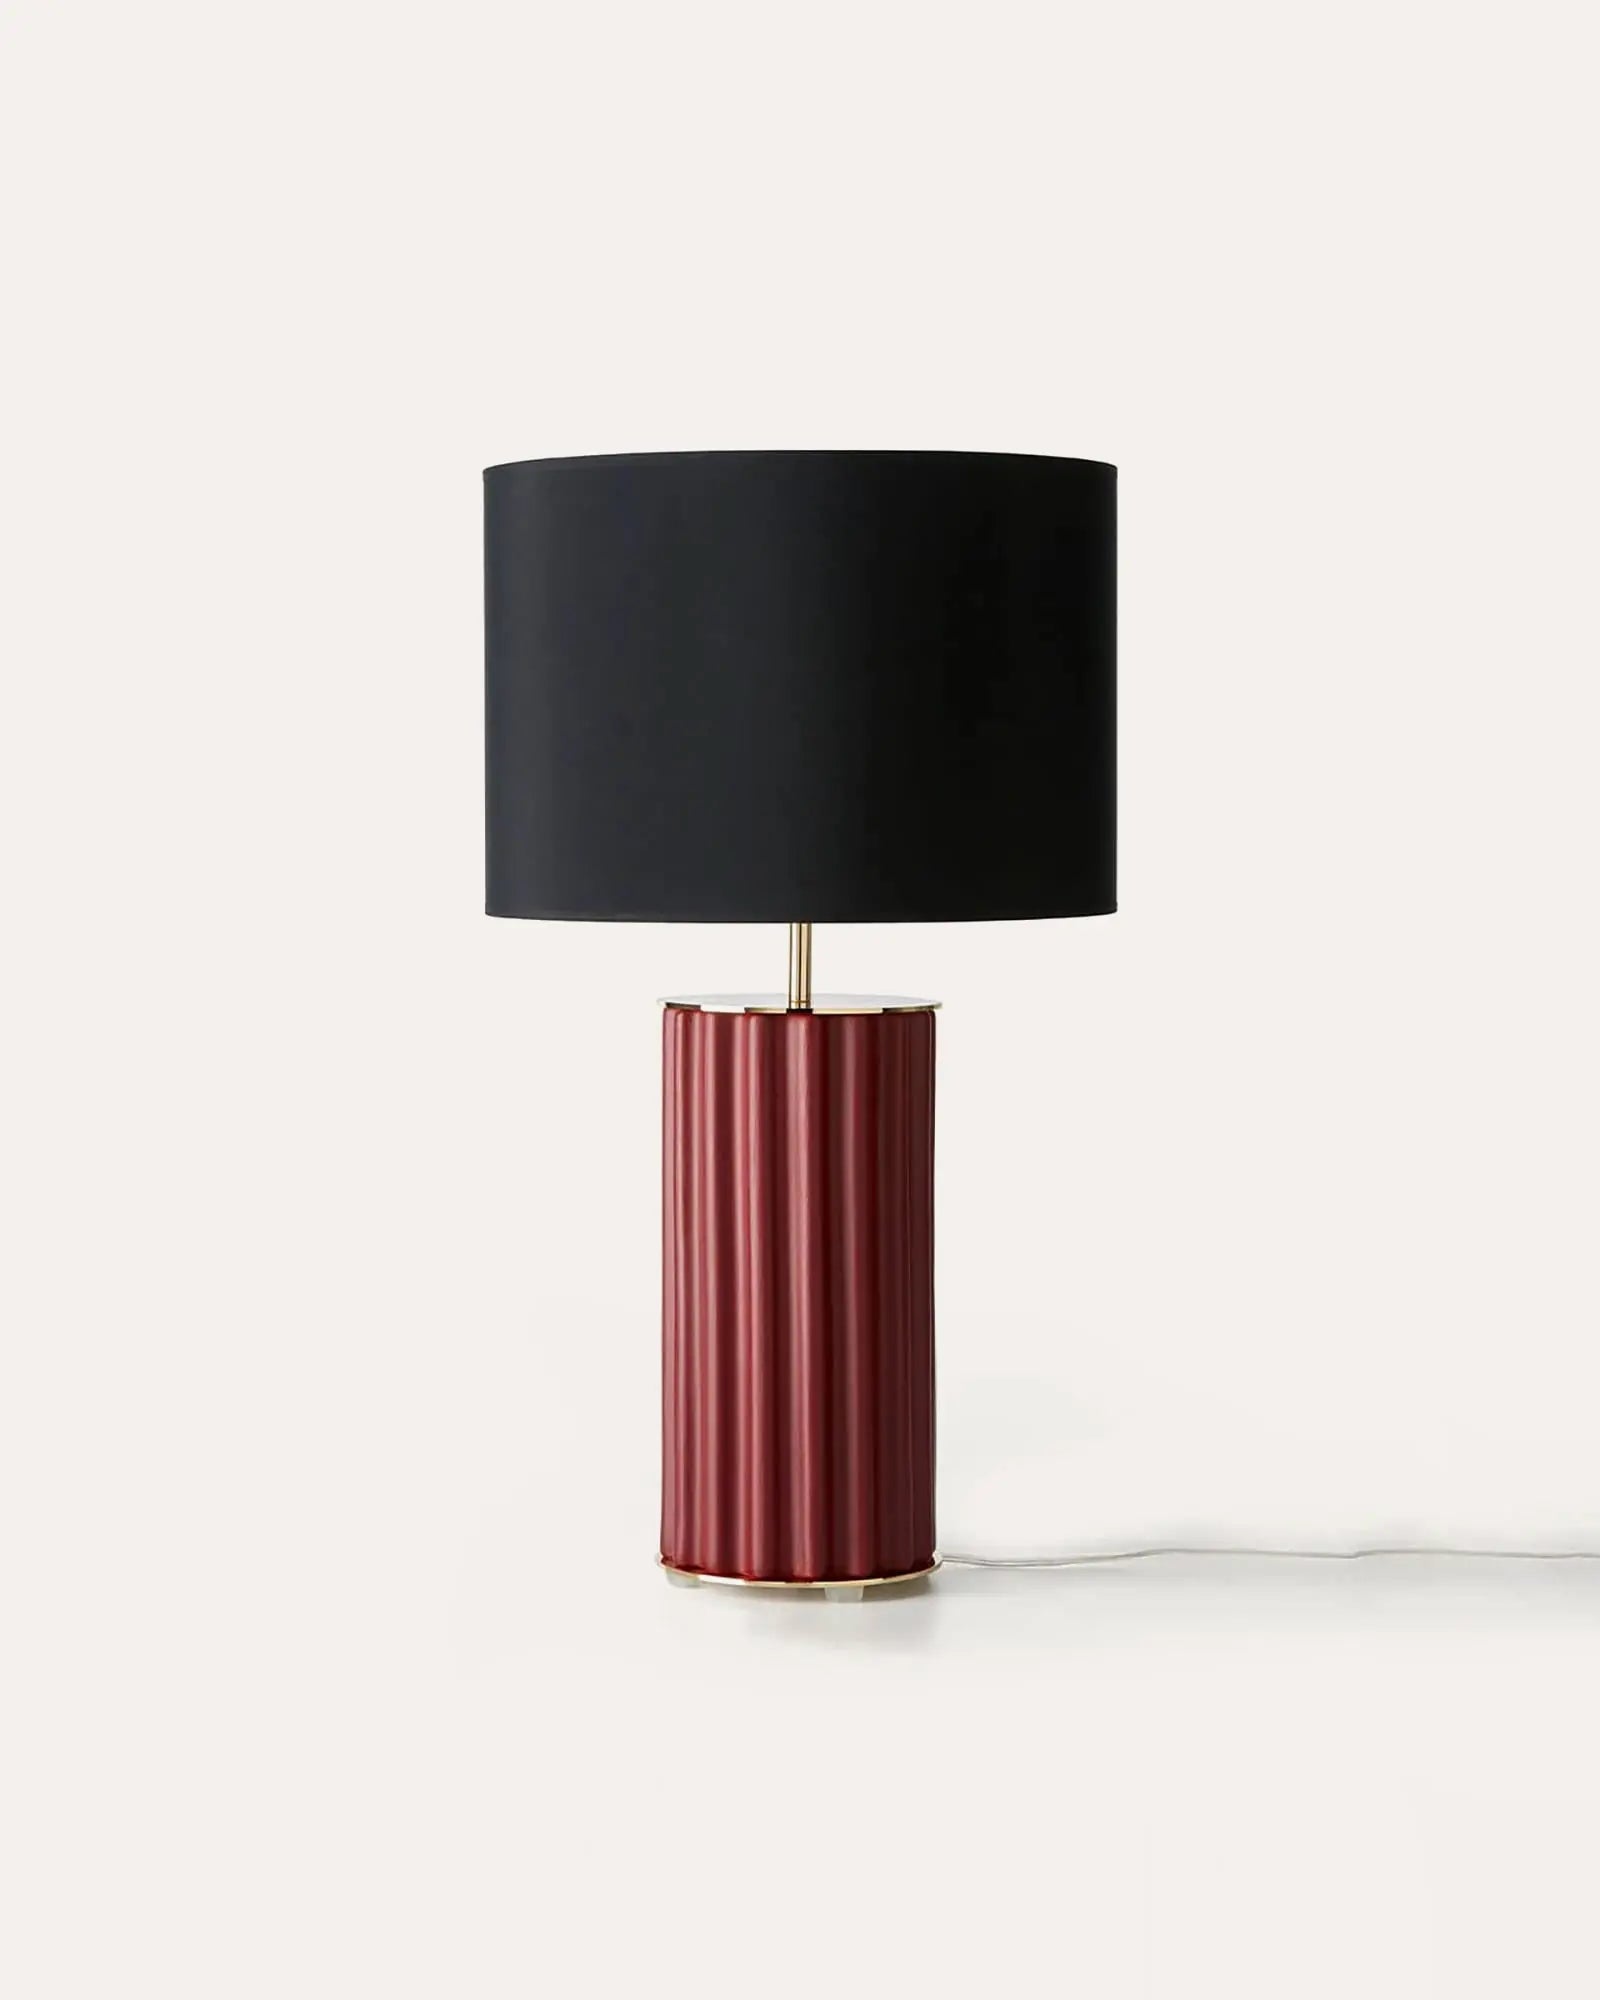 Sonica decorative contemporary ceramic and black fabric table lamp